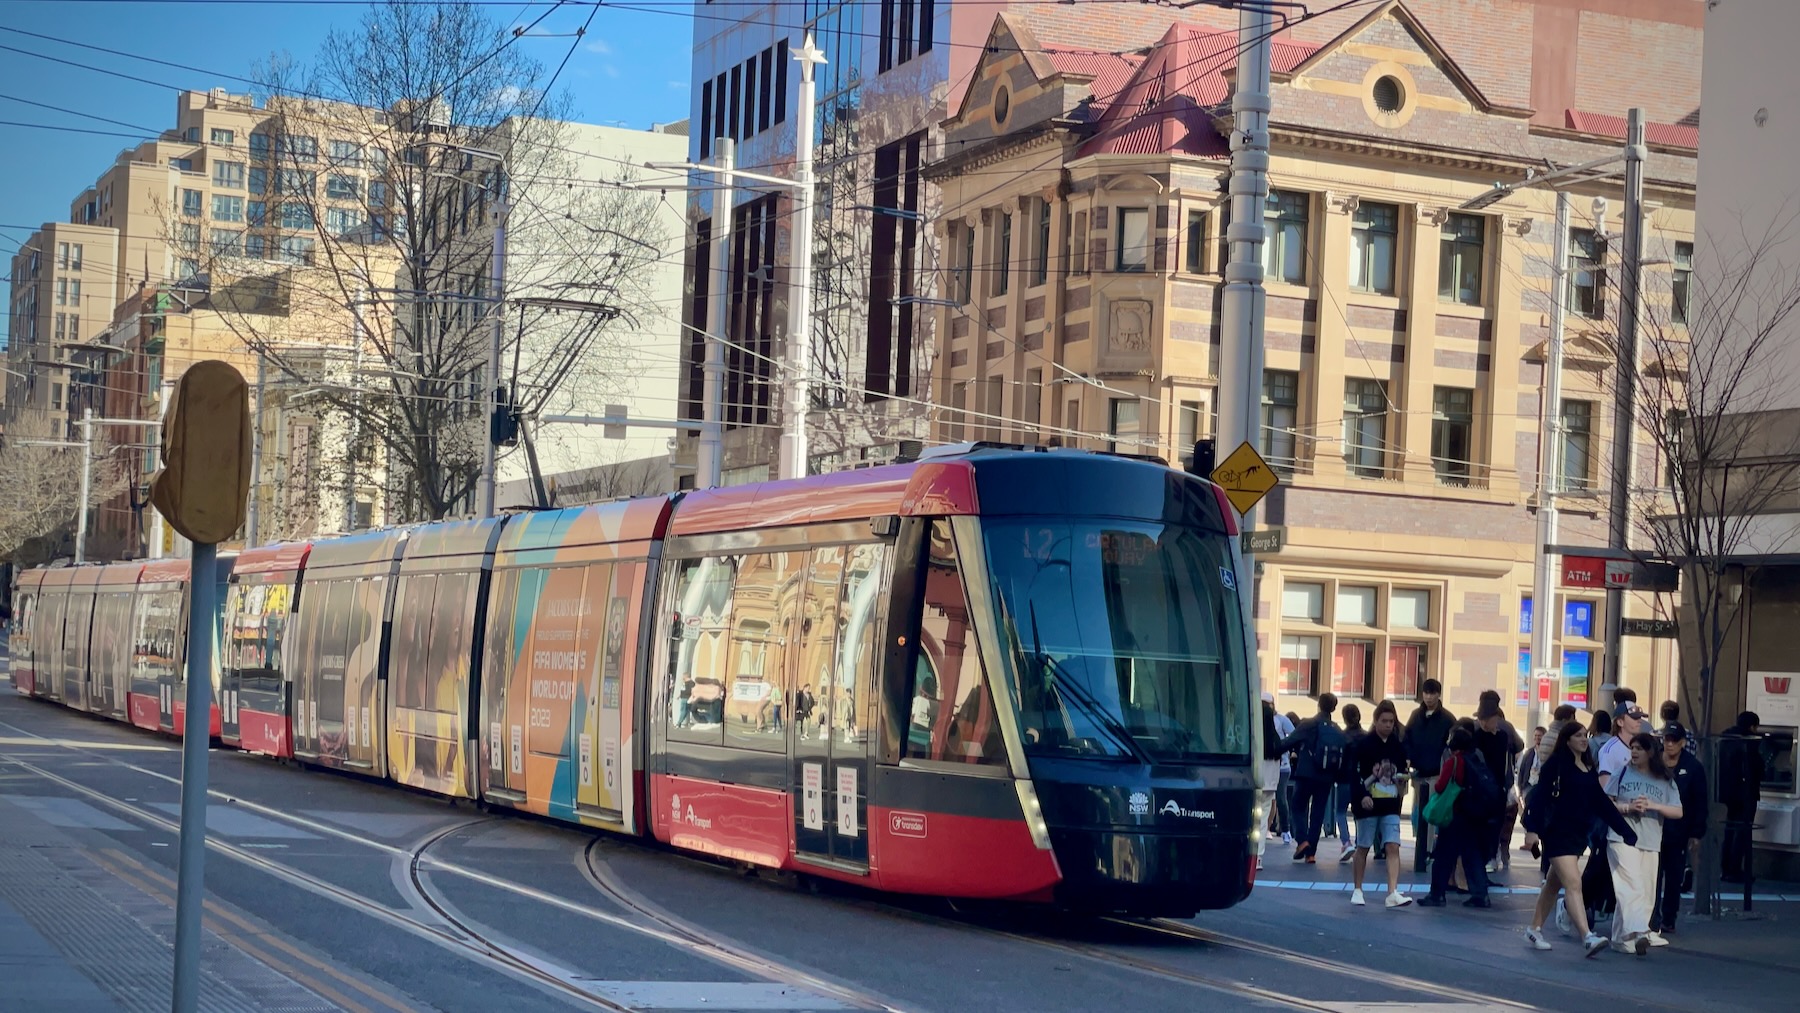 Sydney Light Rail tram on George Street at the corner of Hay Street.